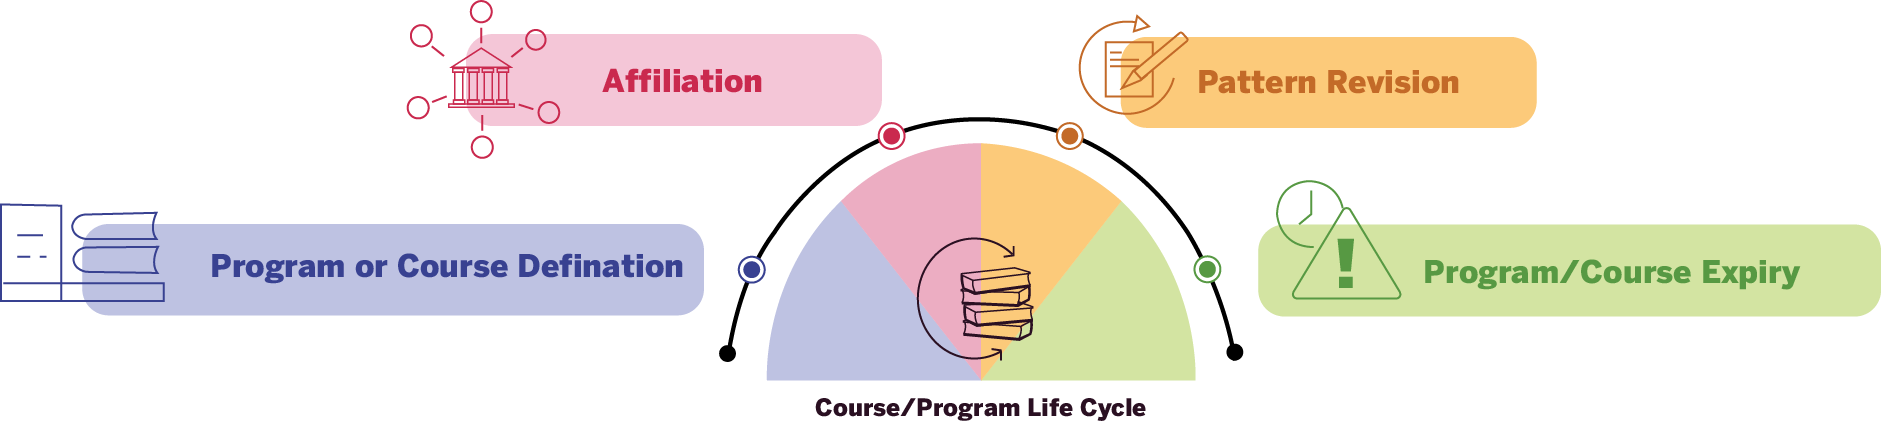 Course / Program Life Cycle Image